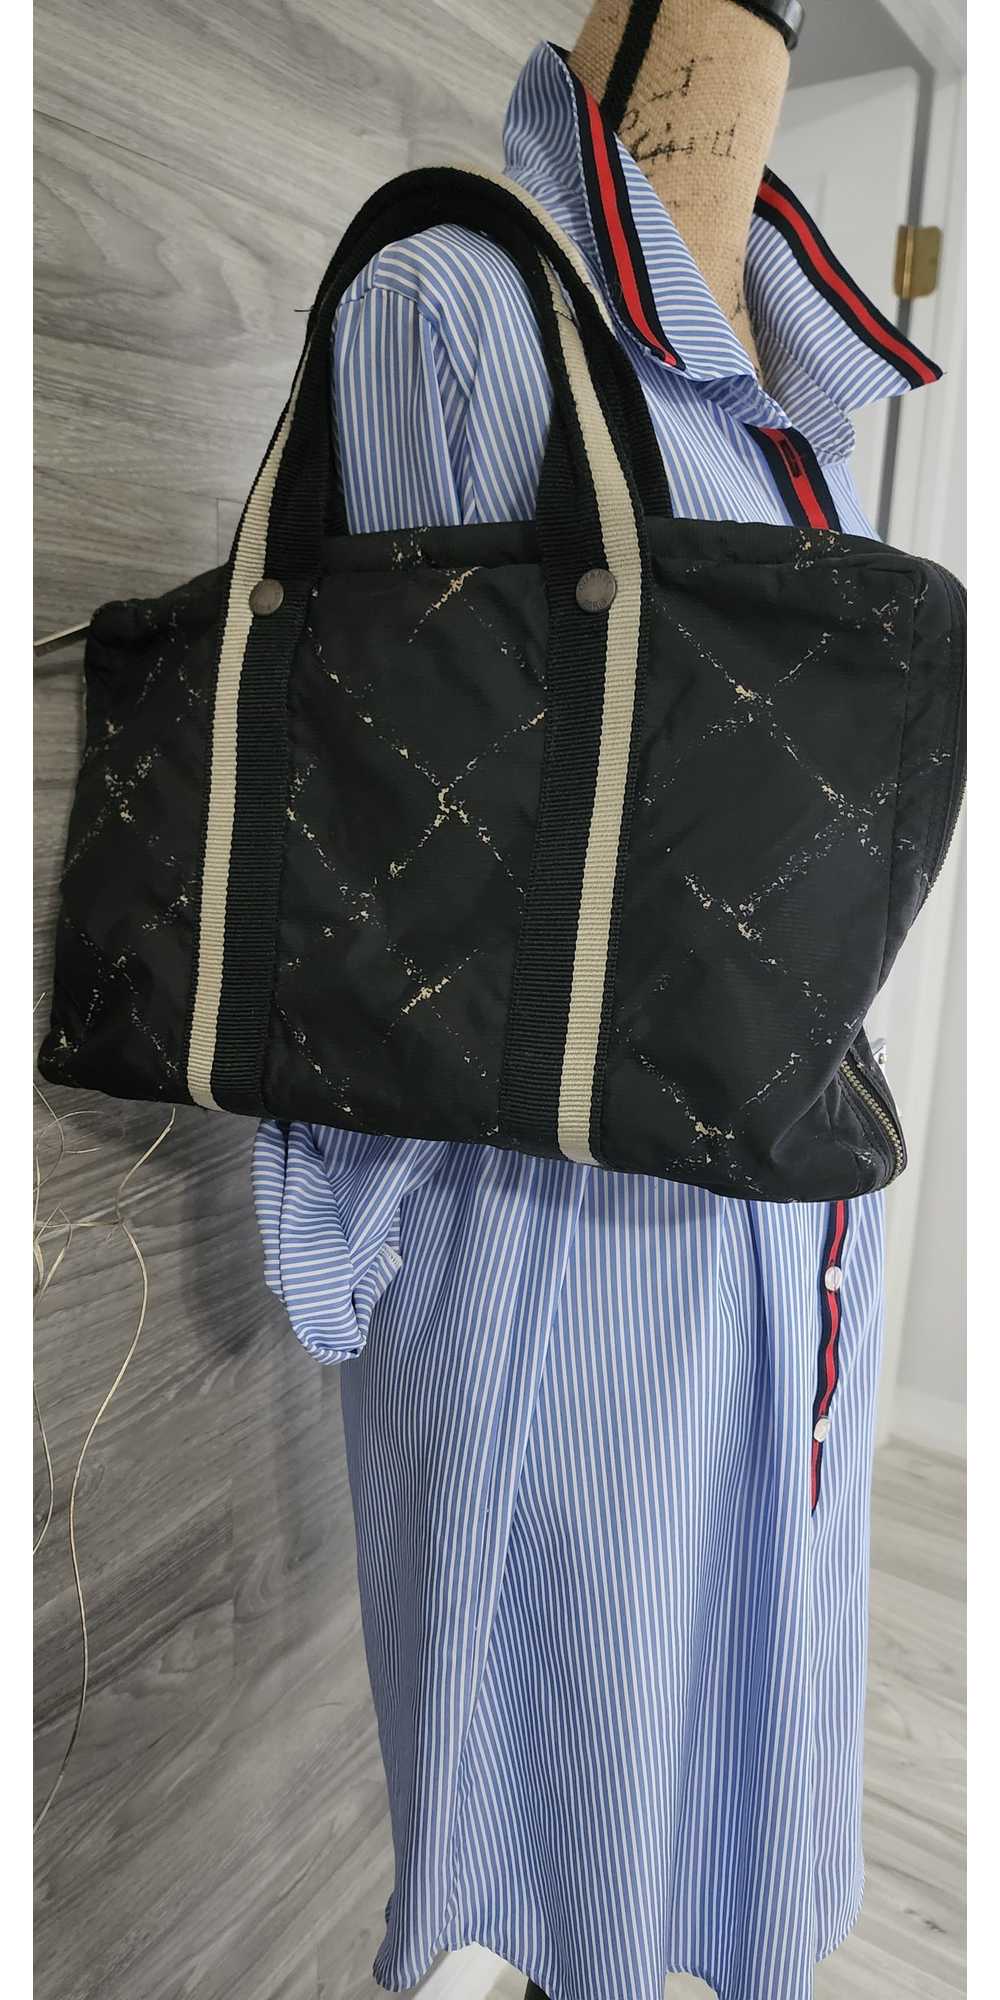 Chanel Sport Line Diaper Bag Tote Handbag Purse - image 2